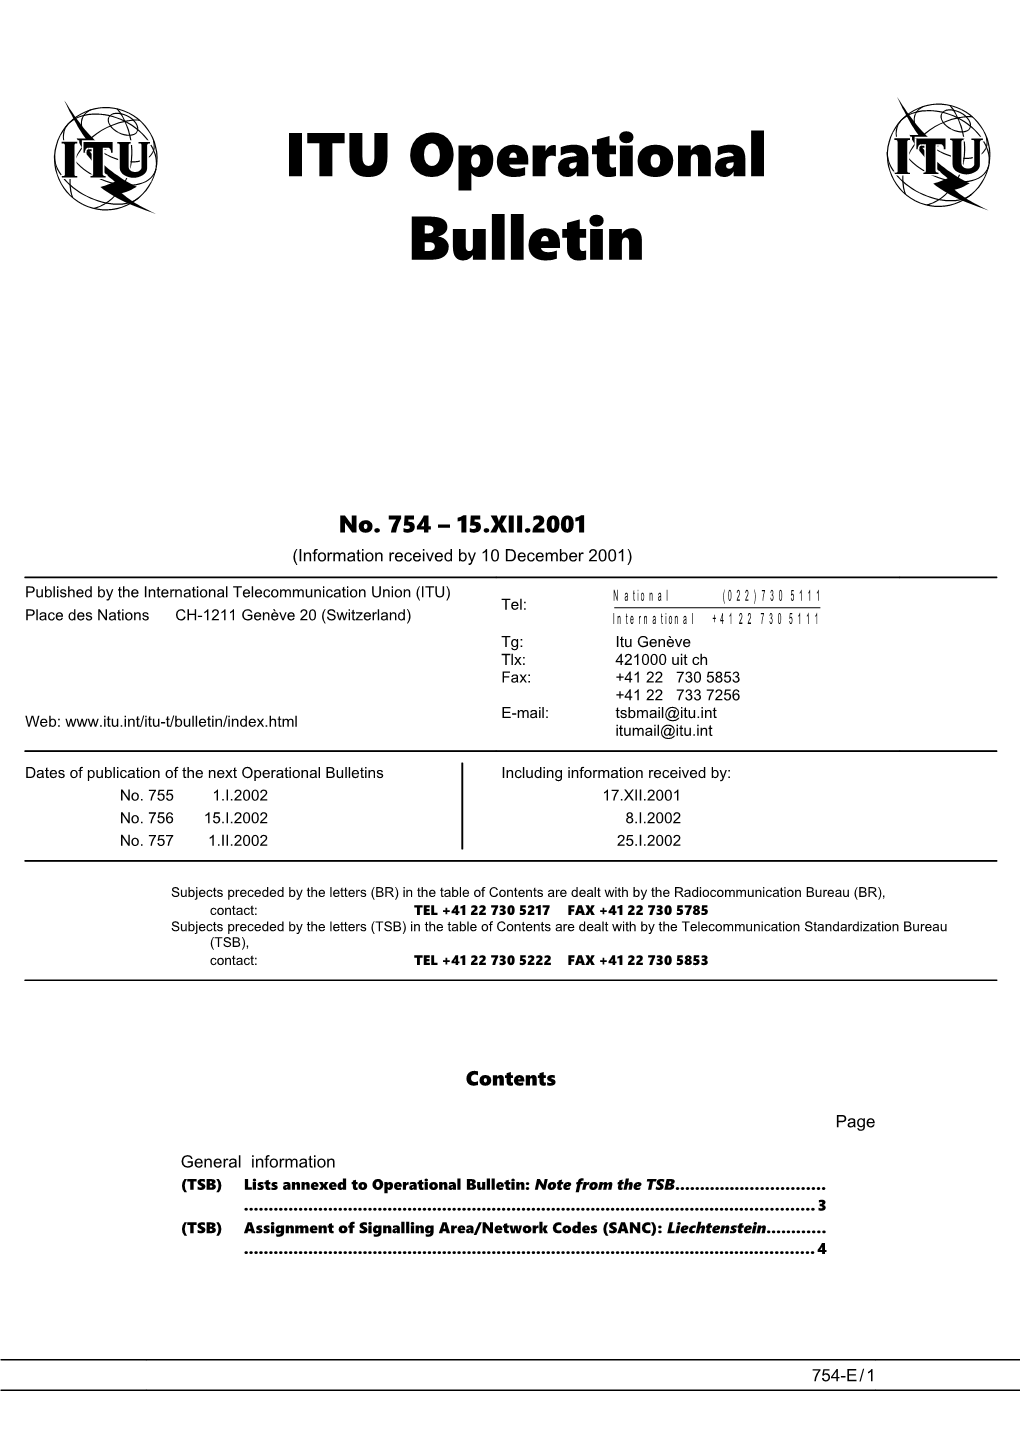 ITU Operational Bulletin 754 - 15.XII.2001